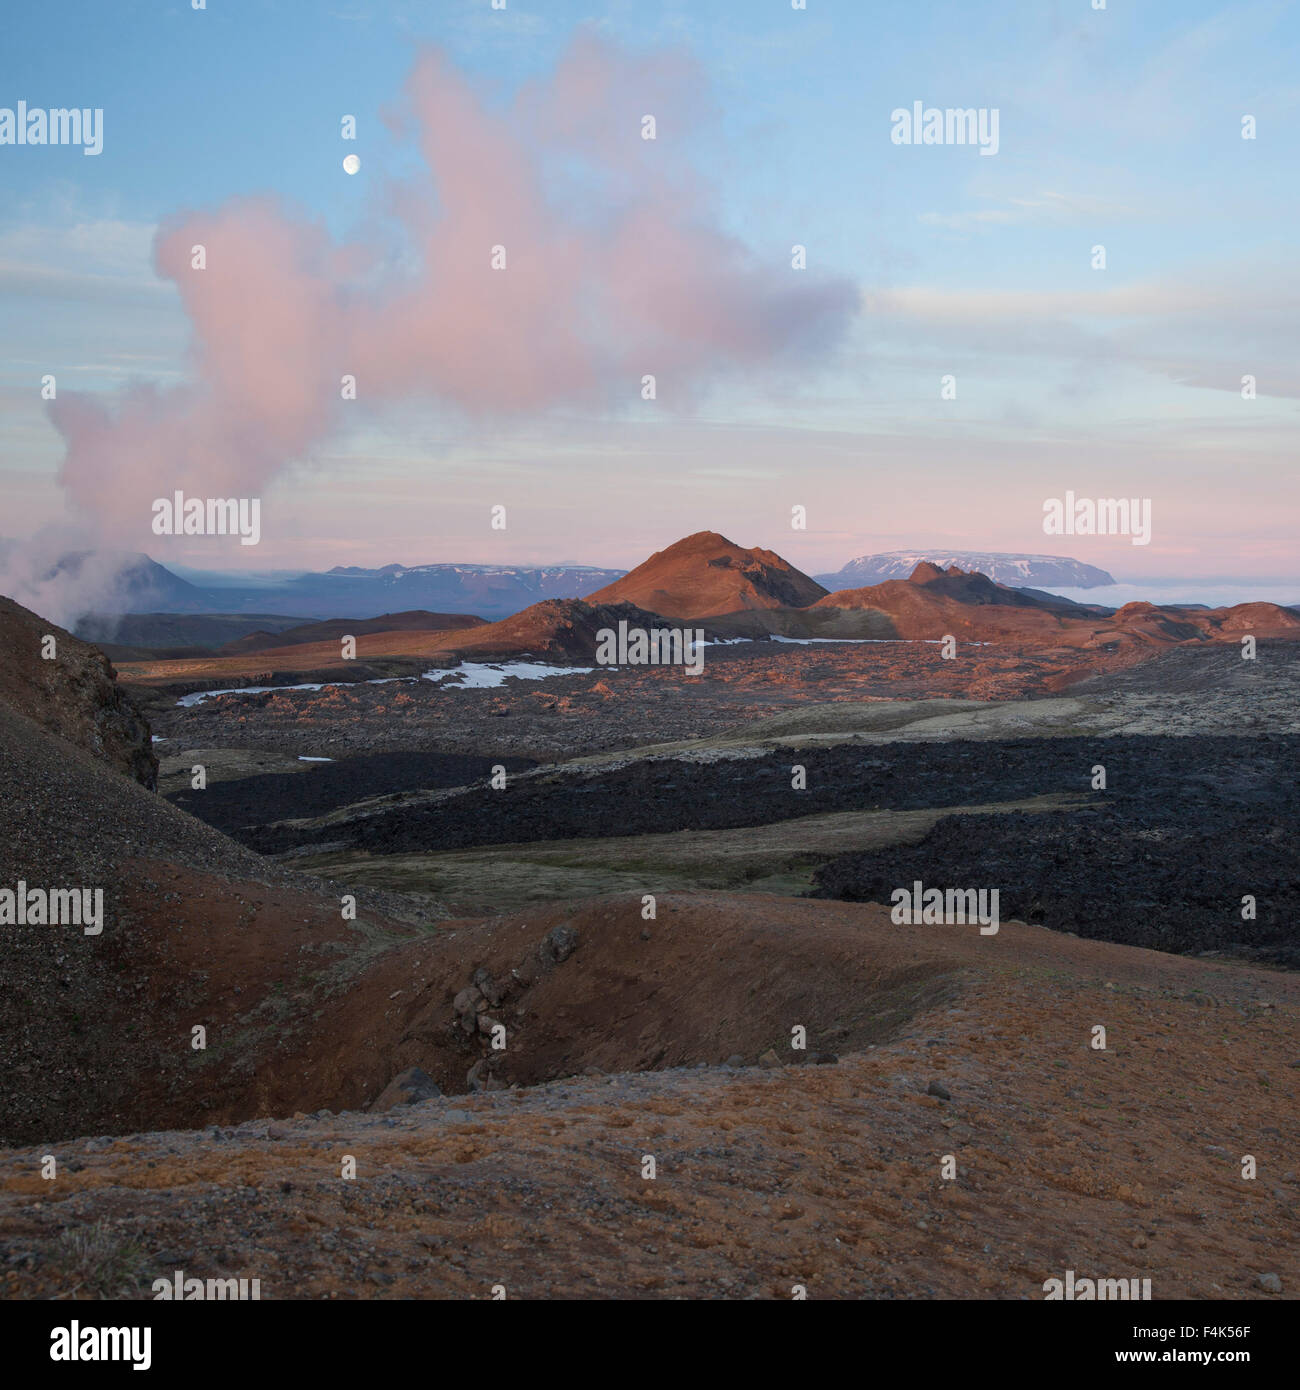 Dawn Mond über den schwelenden Lavafeld bei Leirhnjukur, Krafla-Vulkan, Myvatn, Nordhurland Eystra, Island. Stockfoto